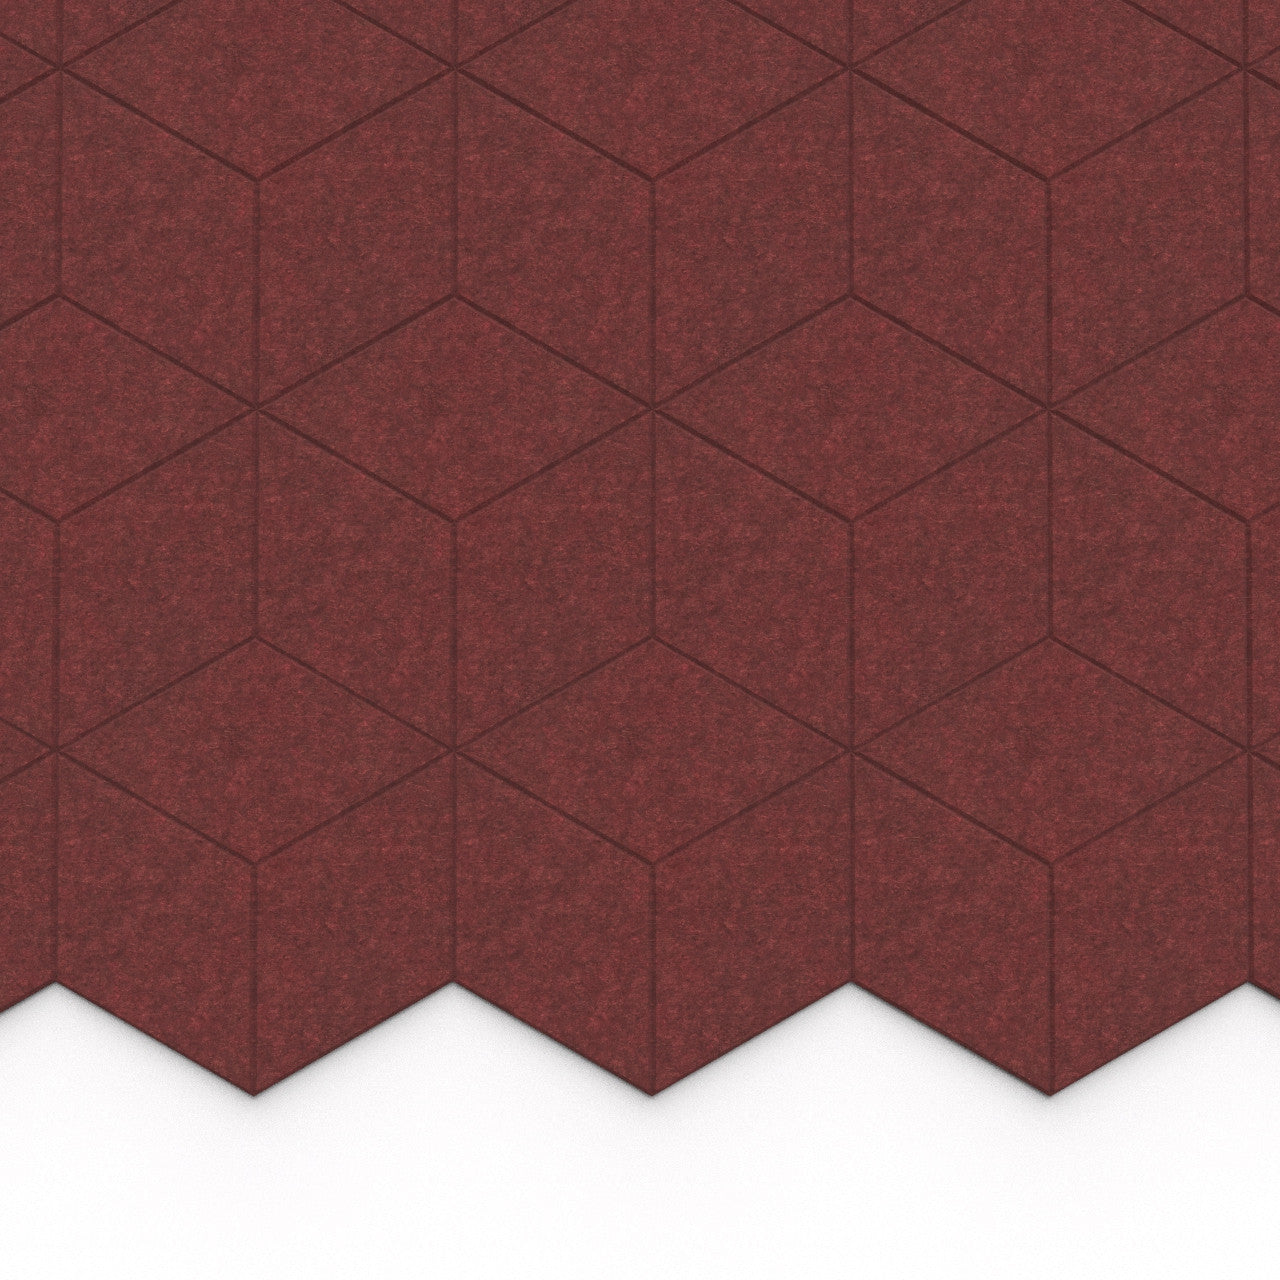 100% Recycled PET Felt Hexagon Diamond Large Acoustic Tile Wine | Plastock